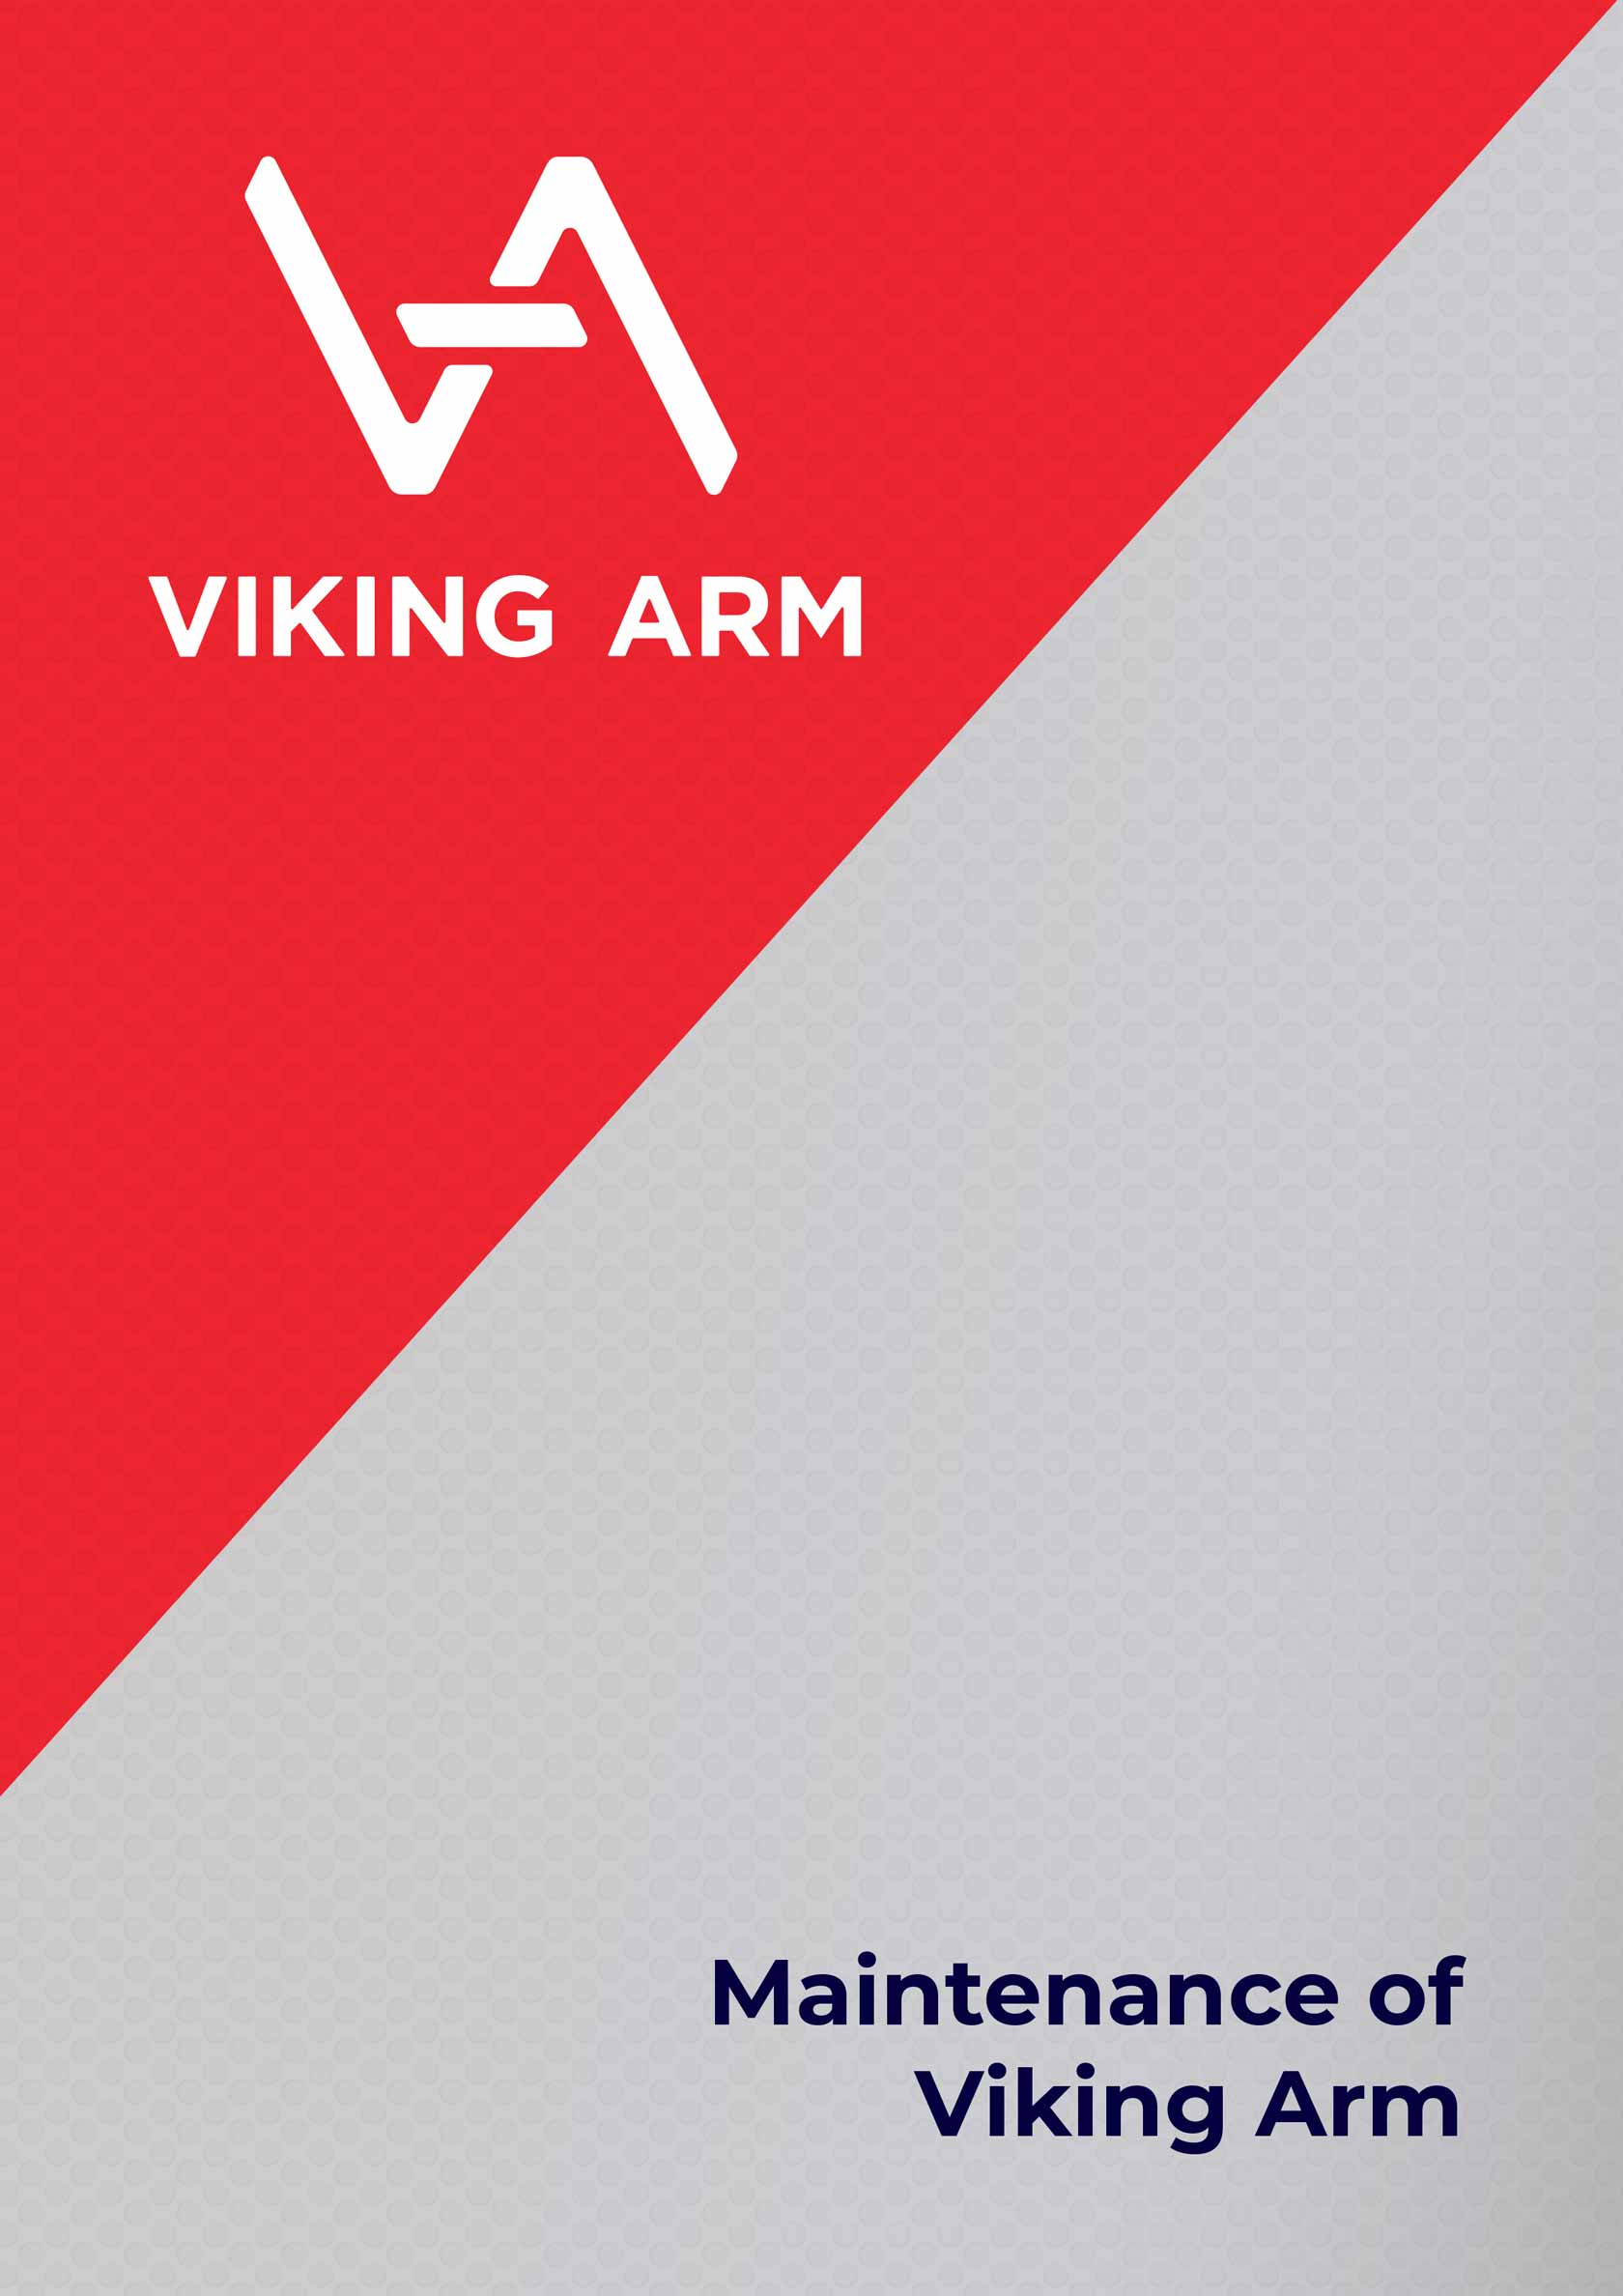 Viking Arm, Authorized Viking Retailer